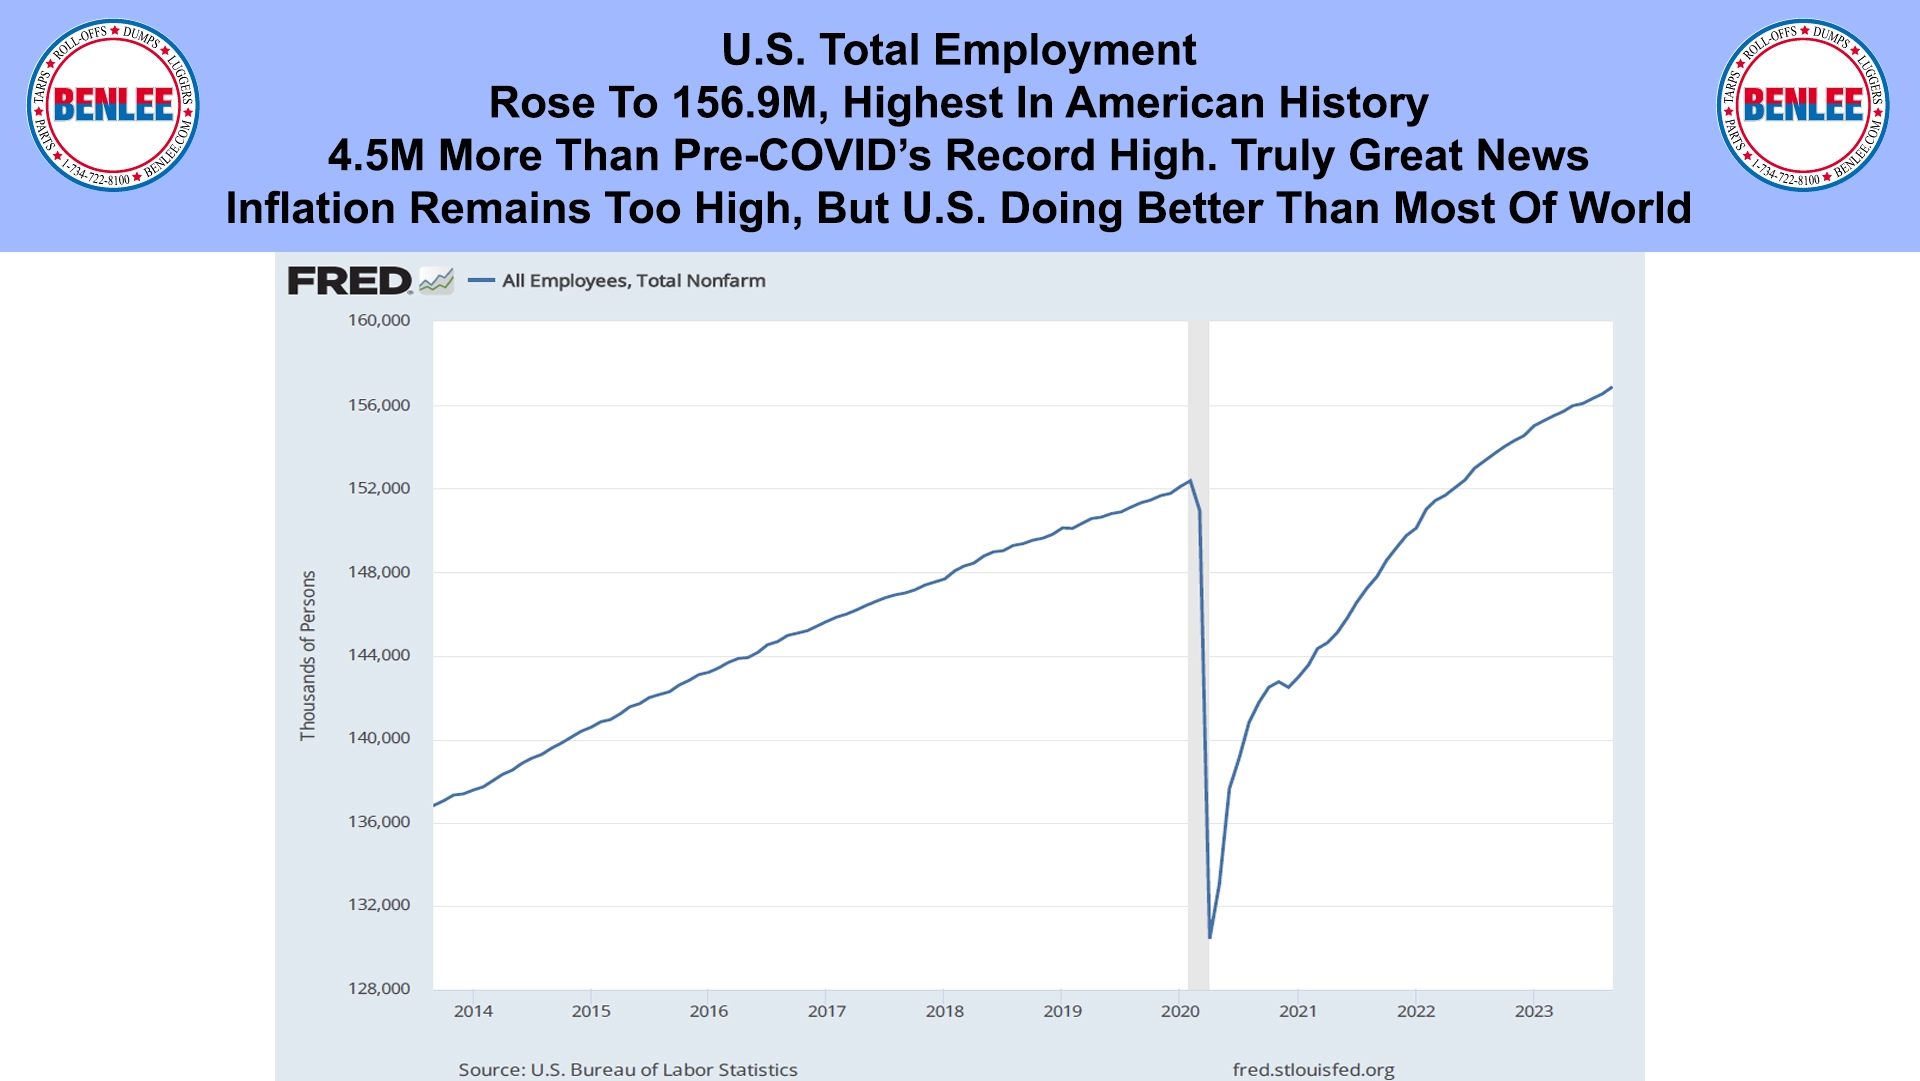 U.S. Total Employment